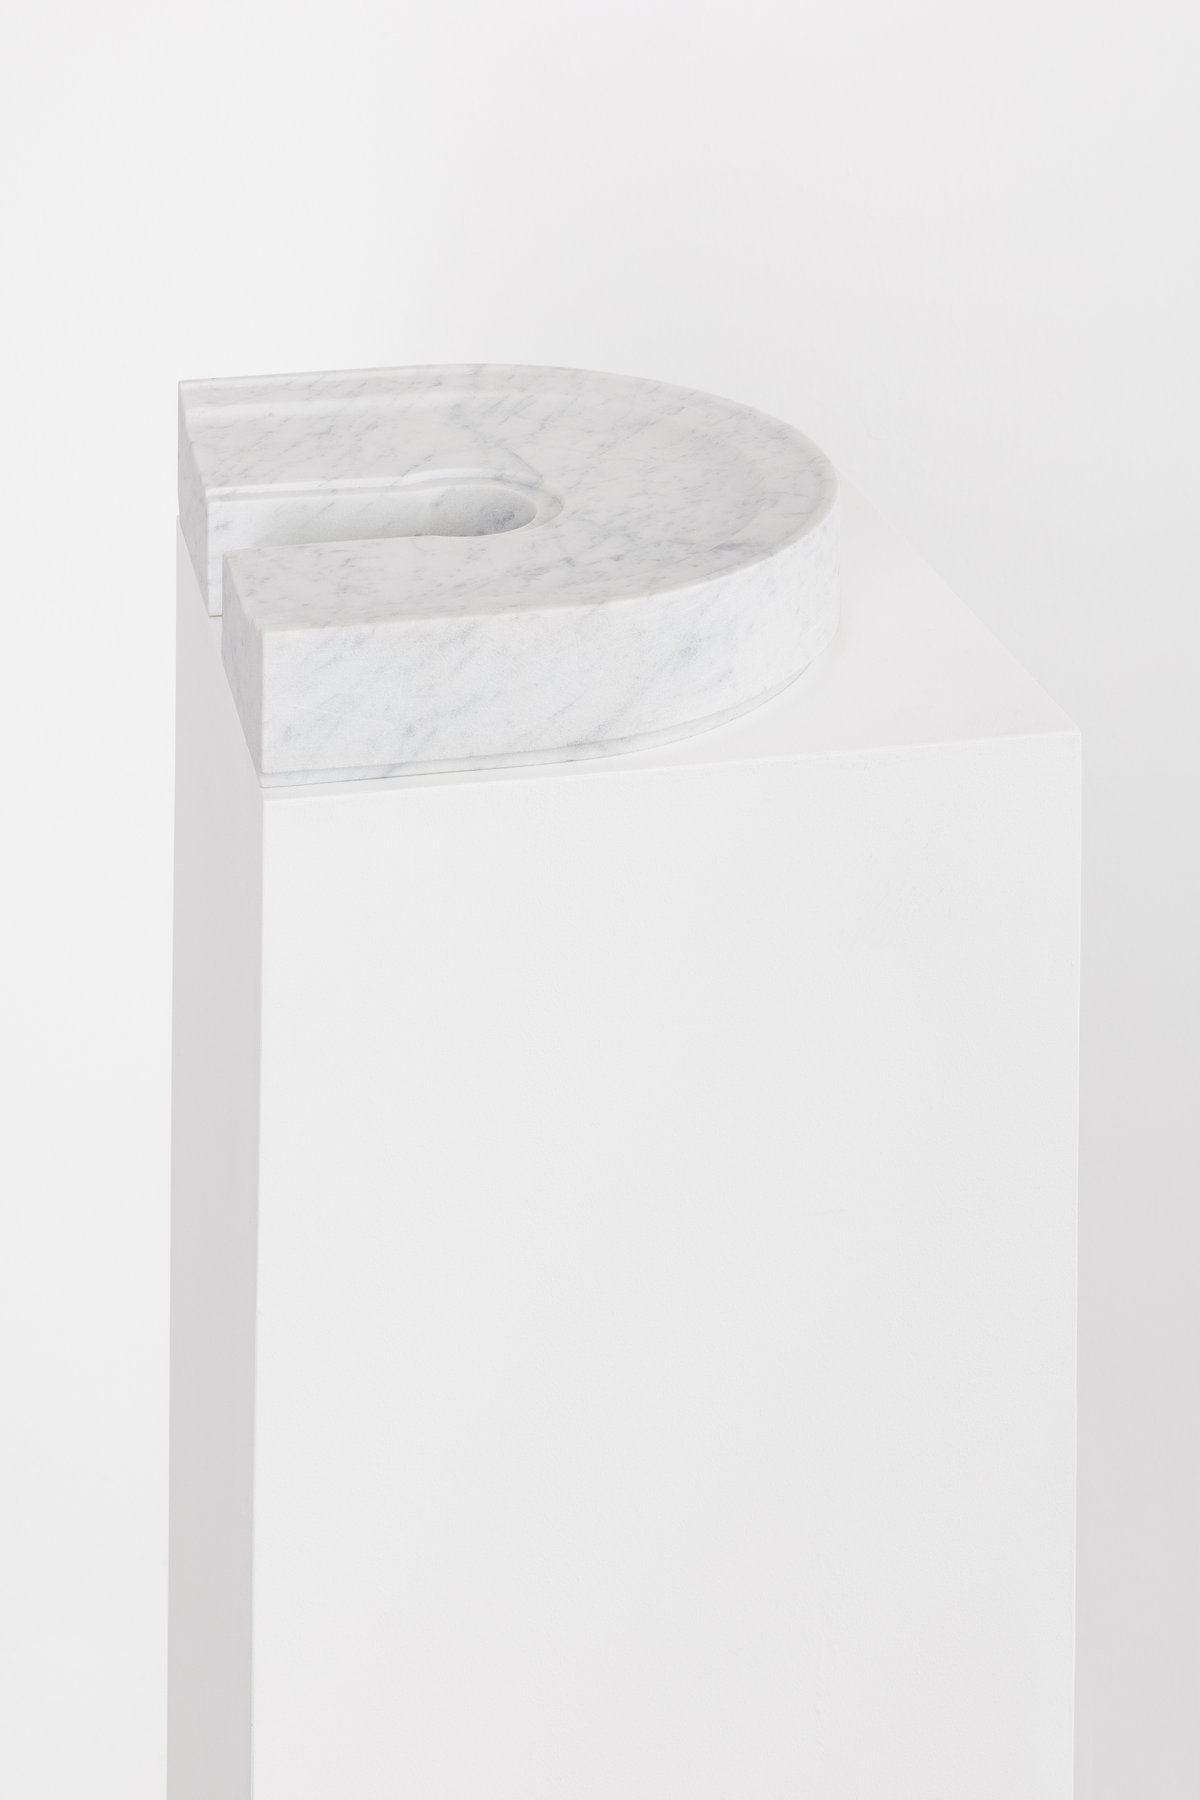 Benjamin HirteUntitled, 2022Marble35 × 30 × 7 cm, 117.5 × 36 × 35 cm (with plinth)New Space Show, 2022, Layr Singerstraße, Vienna